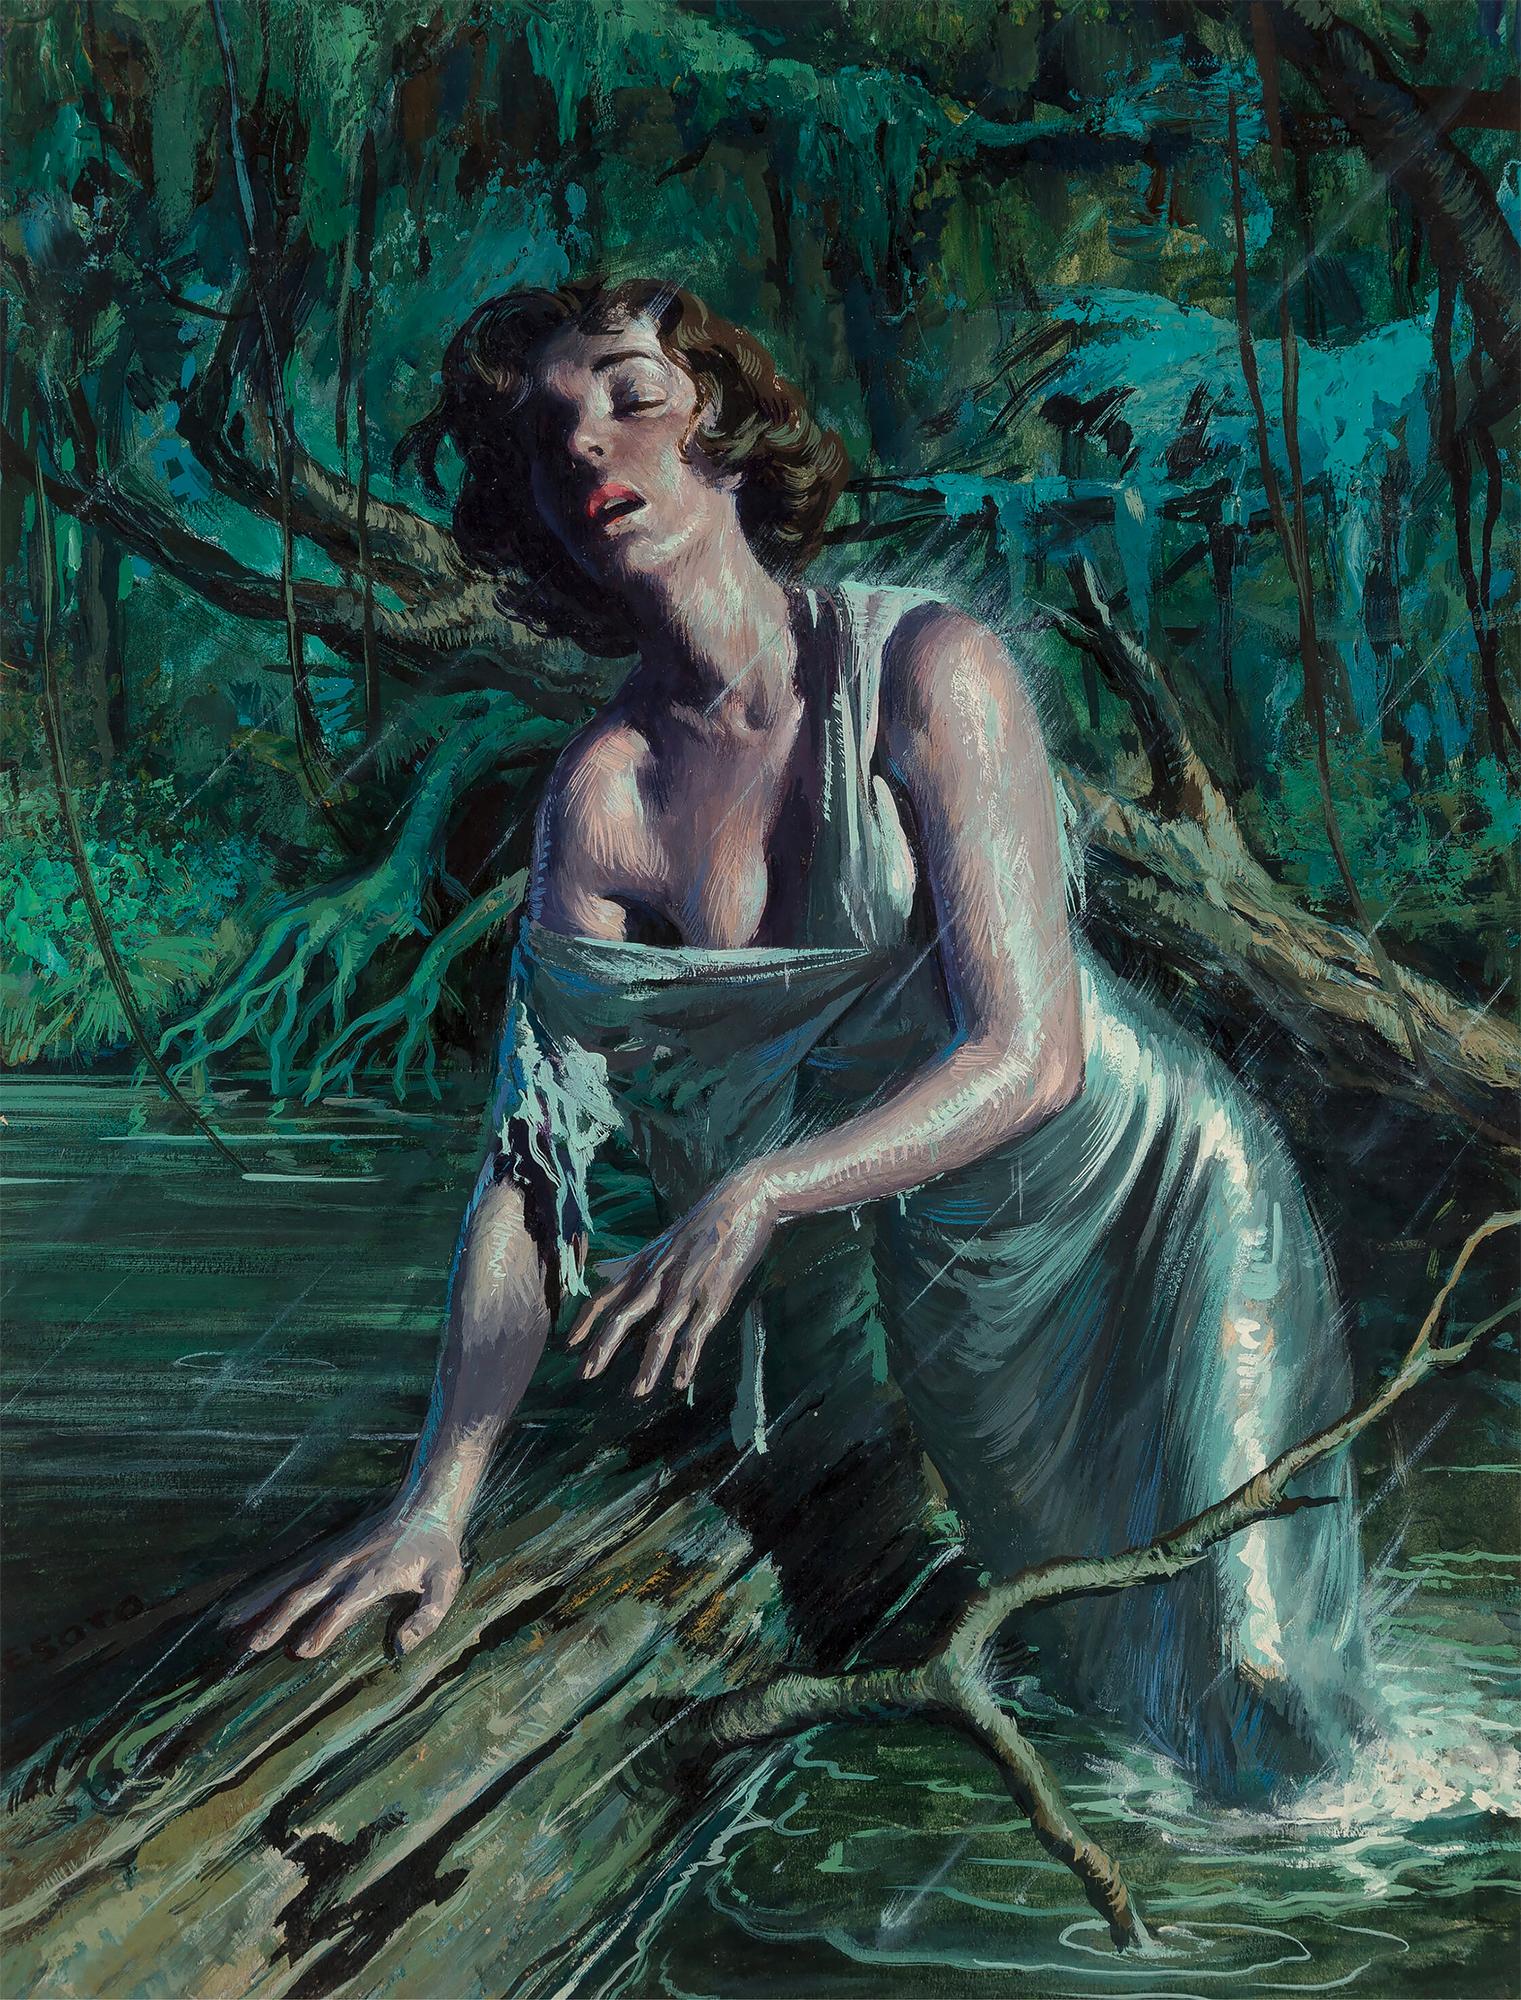 Rafael DeSoto - Sexy Woman in a Swamp Storm image